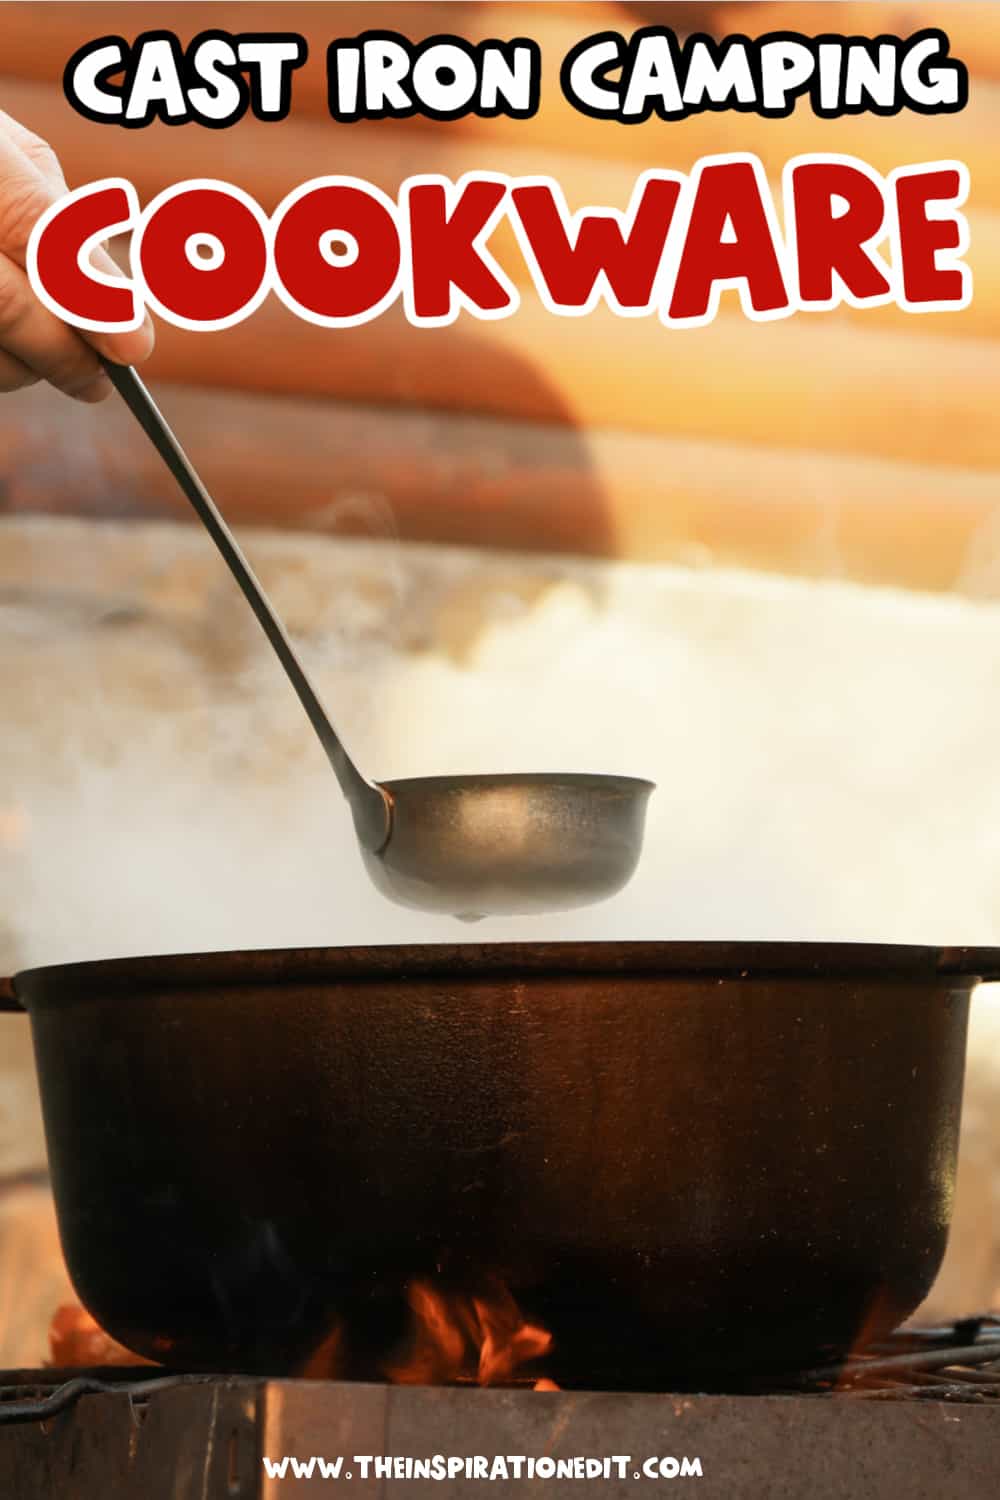 https://www.theinspirationedit.com/wp-content/uploads/2022/05/cast-iron-camping-cookware.jpg